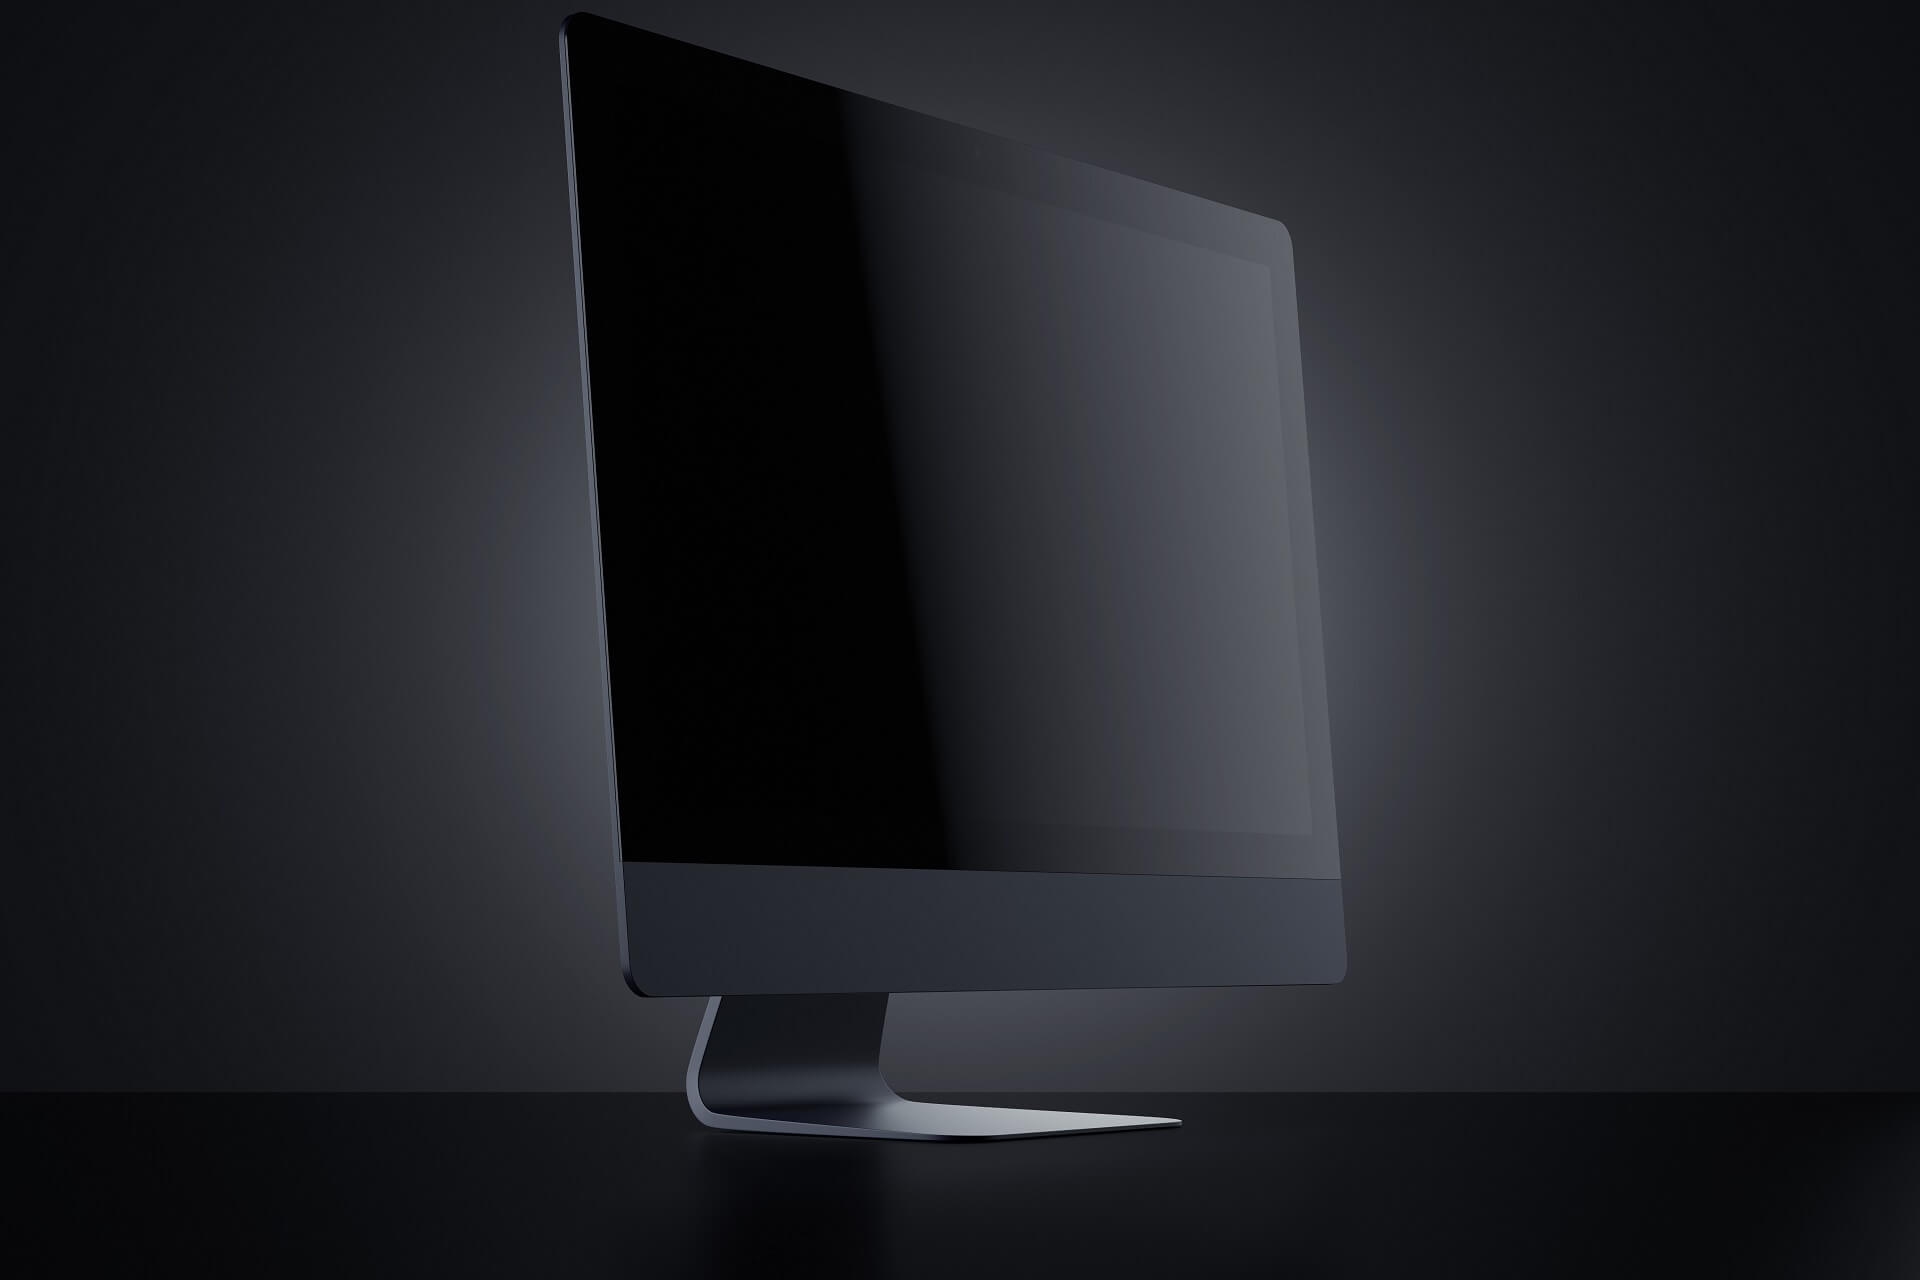 Macbook screen is very dark